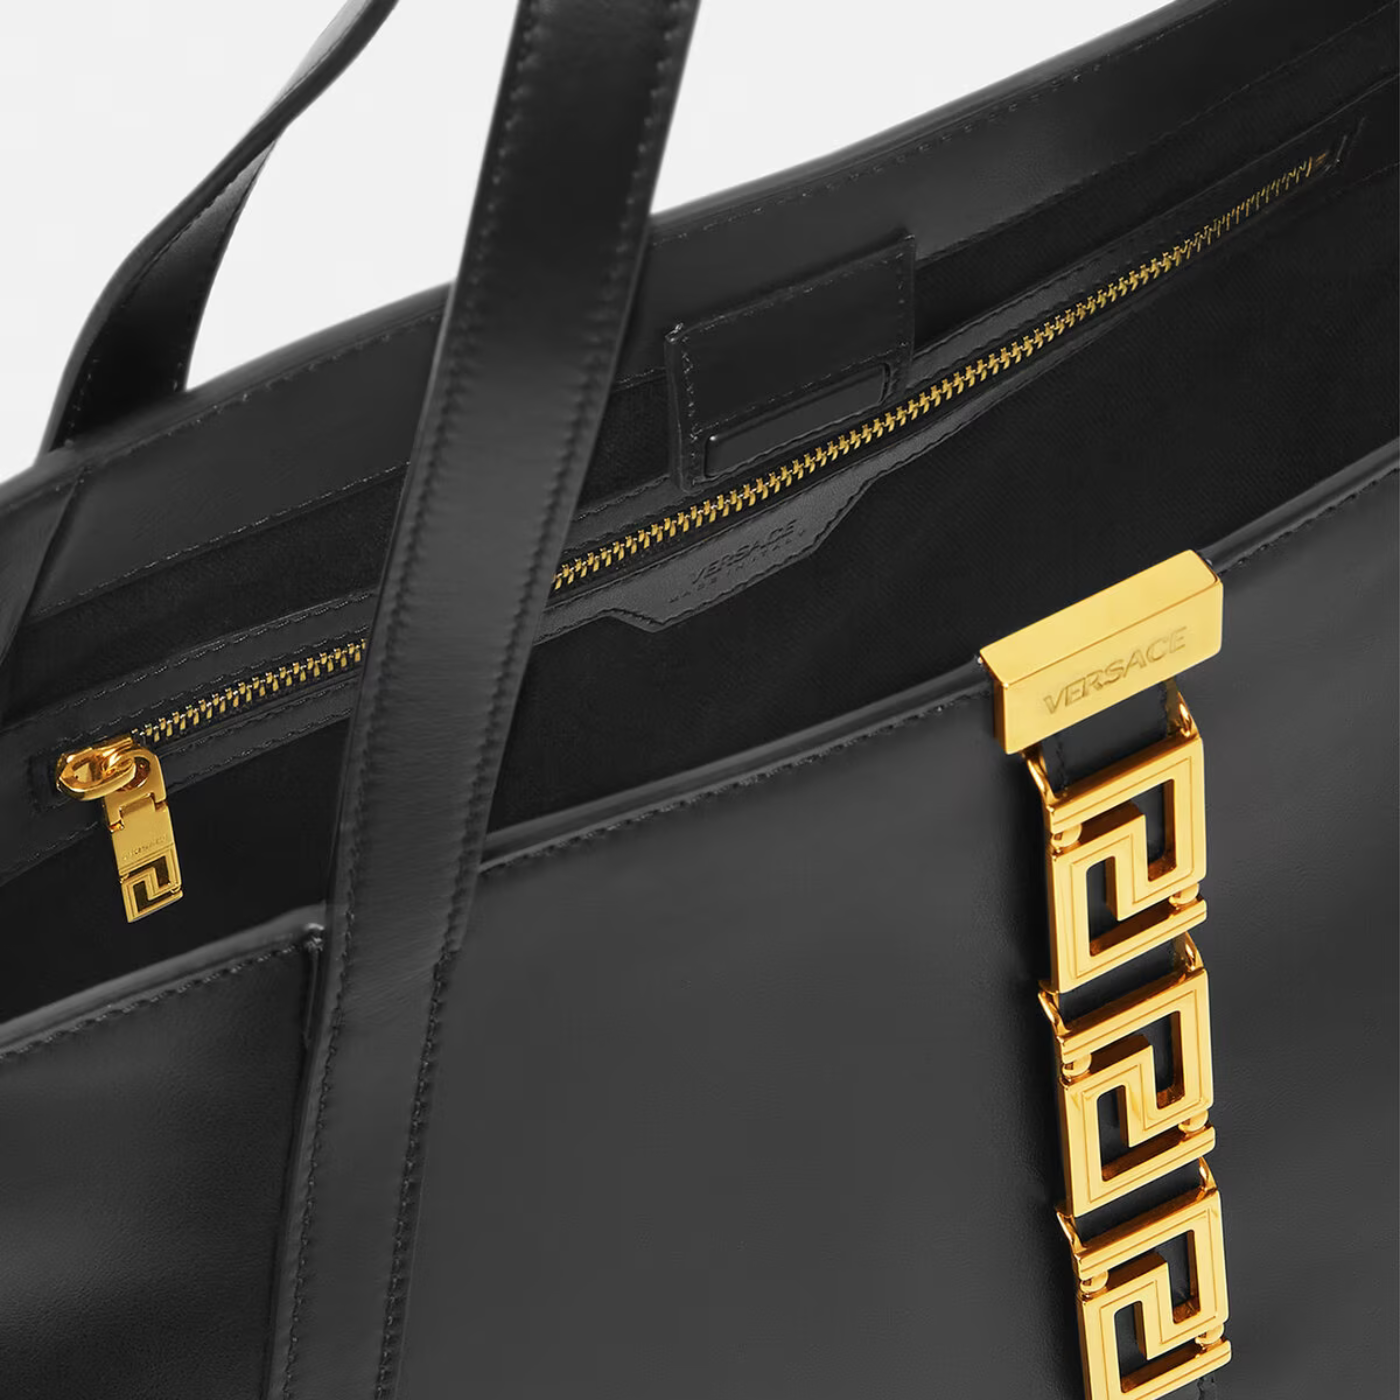 Greca Goddess Large Tote Bag in Black Handbags VERSACE - LOLAMIR